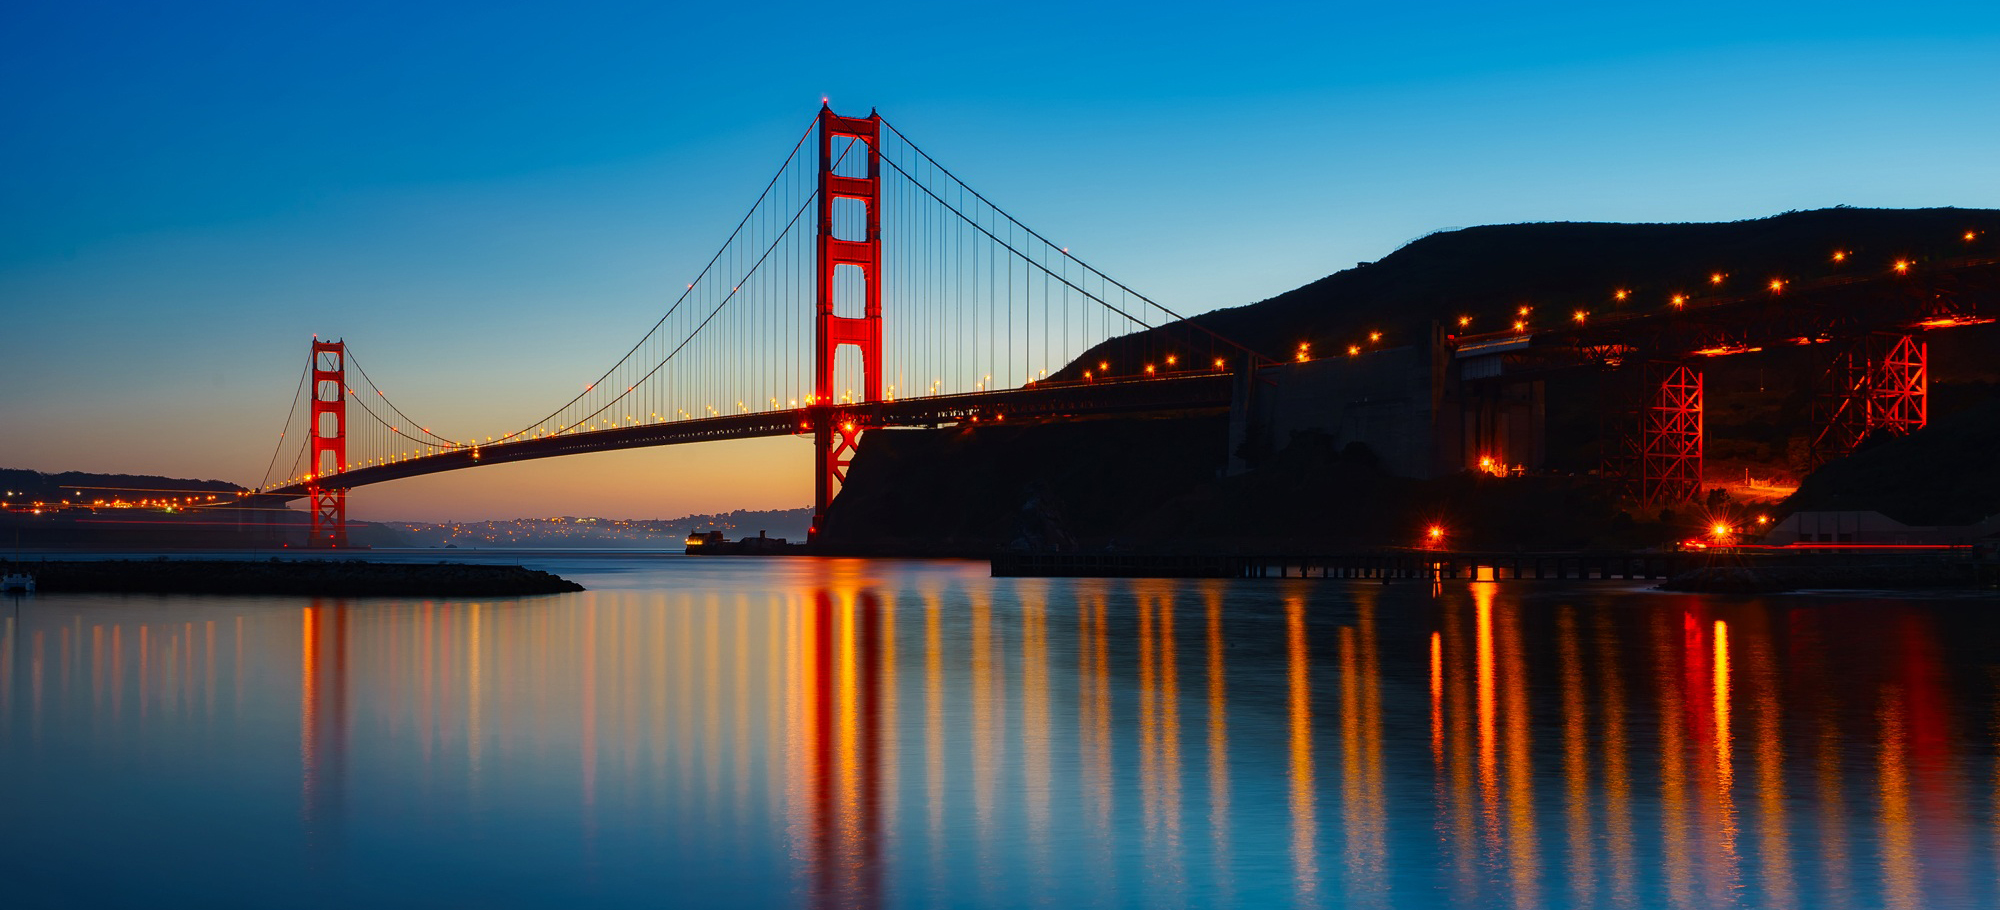 The Golden Gate Bridge in San Francisco California | Breast Cancer Car Donations